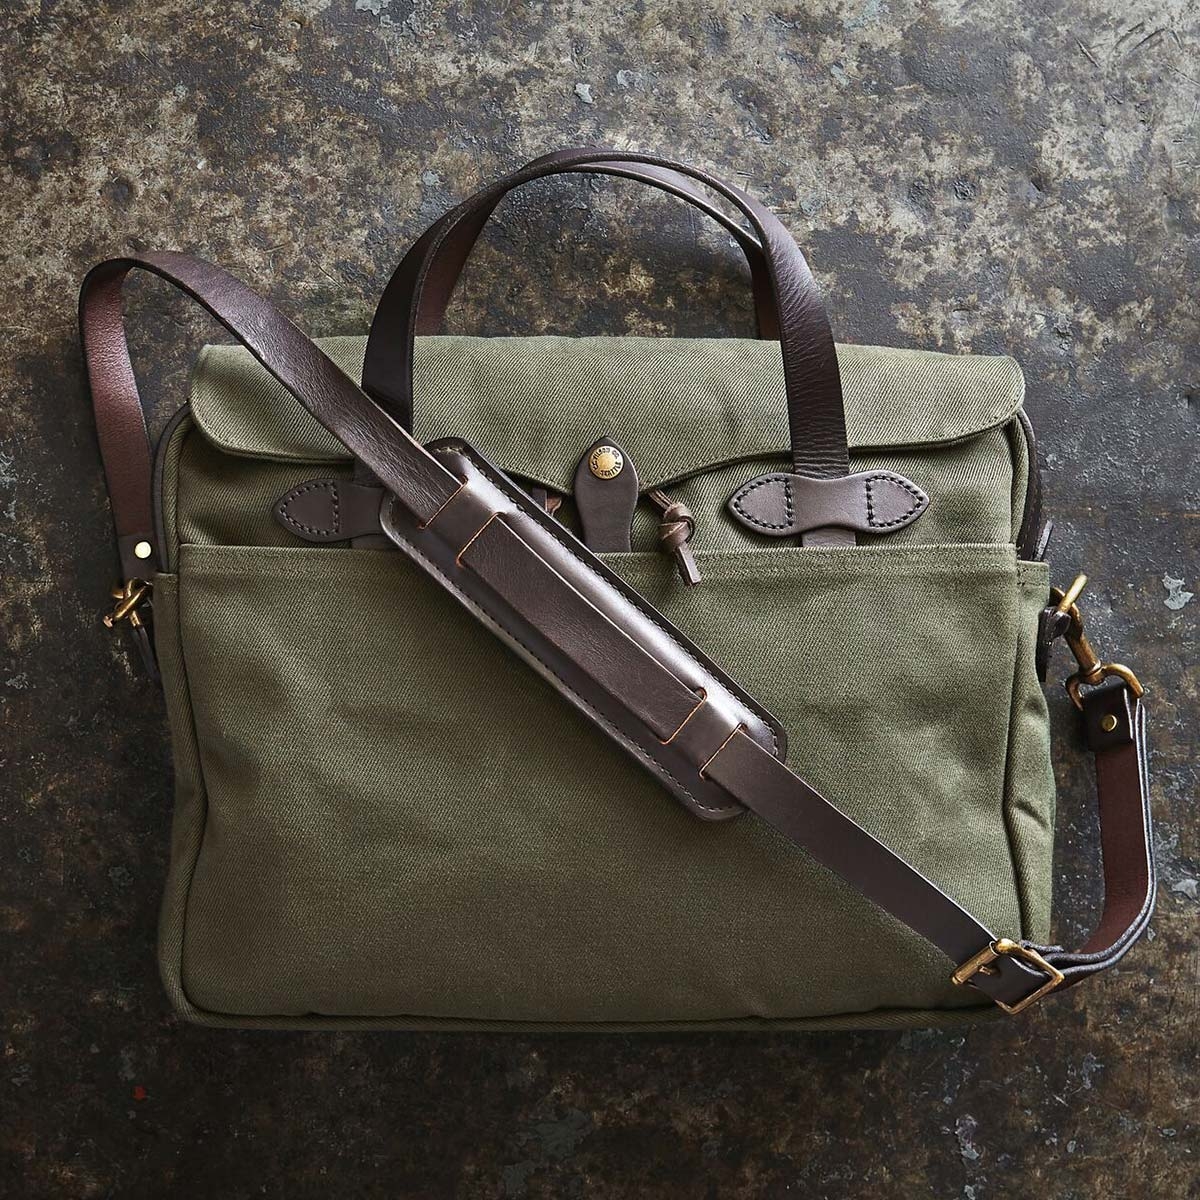 Filson Original Briefcase 11070256 Otter Green a rugged, vintage inspired, briefcase